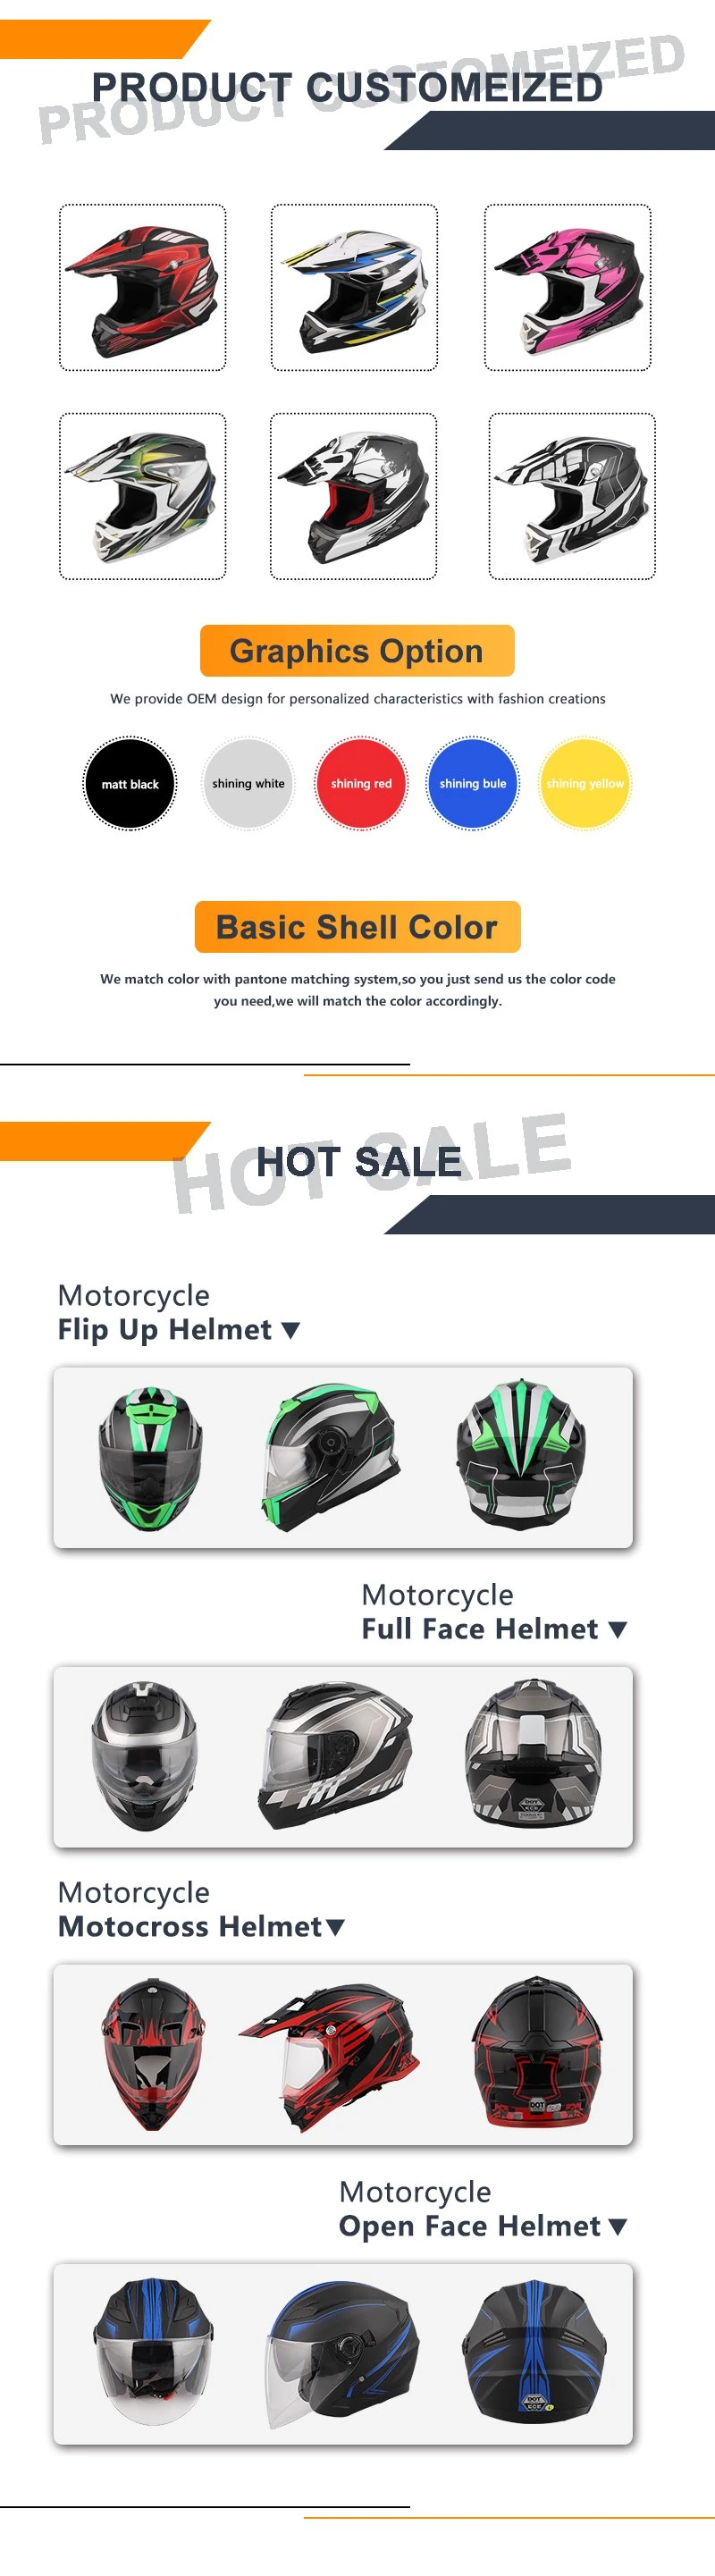 DOT ECE Cheap off Road Adult Motorcycle Cross Mx Helmet Price